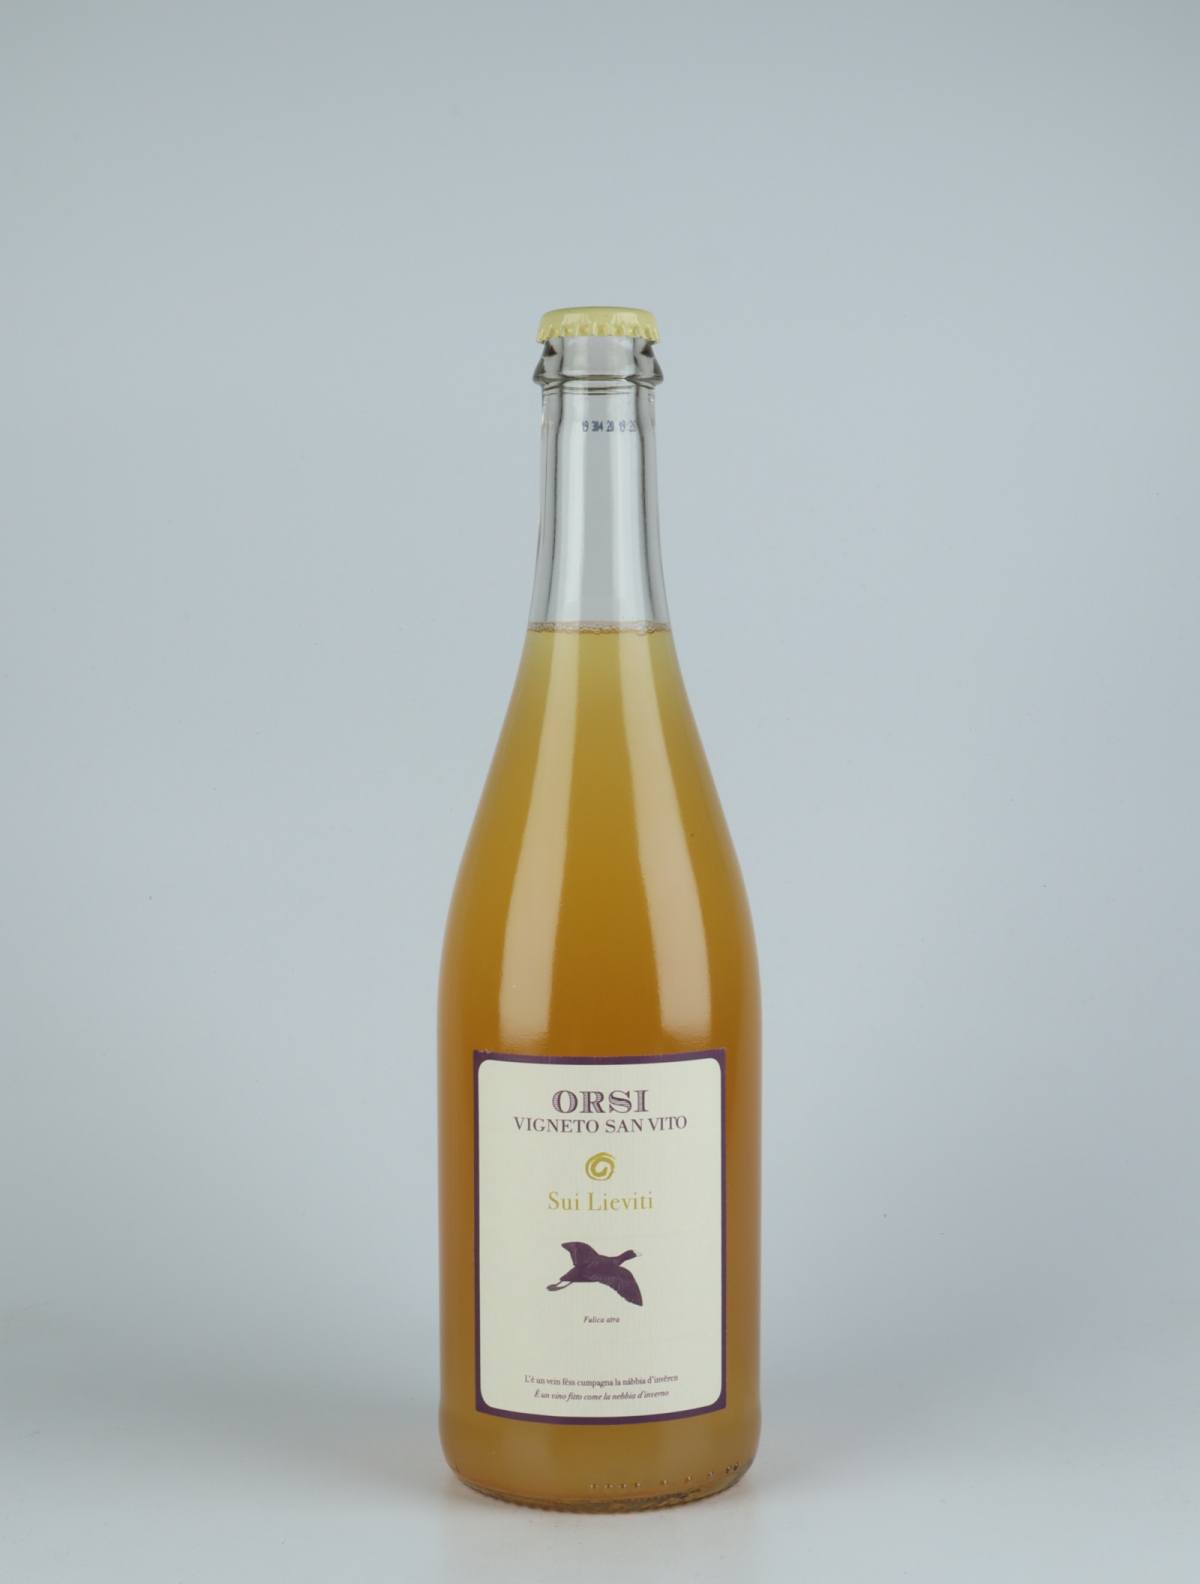 En flaske 2019 Sui Lieviti Mousserende fra Orsi - San Vito, Emilia-Romagna i Italien